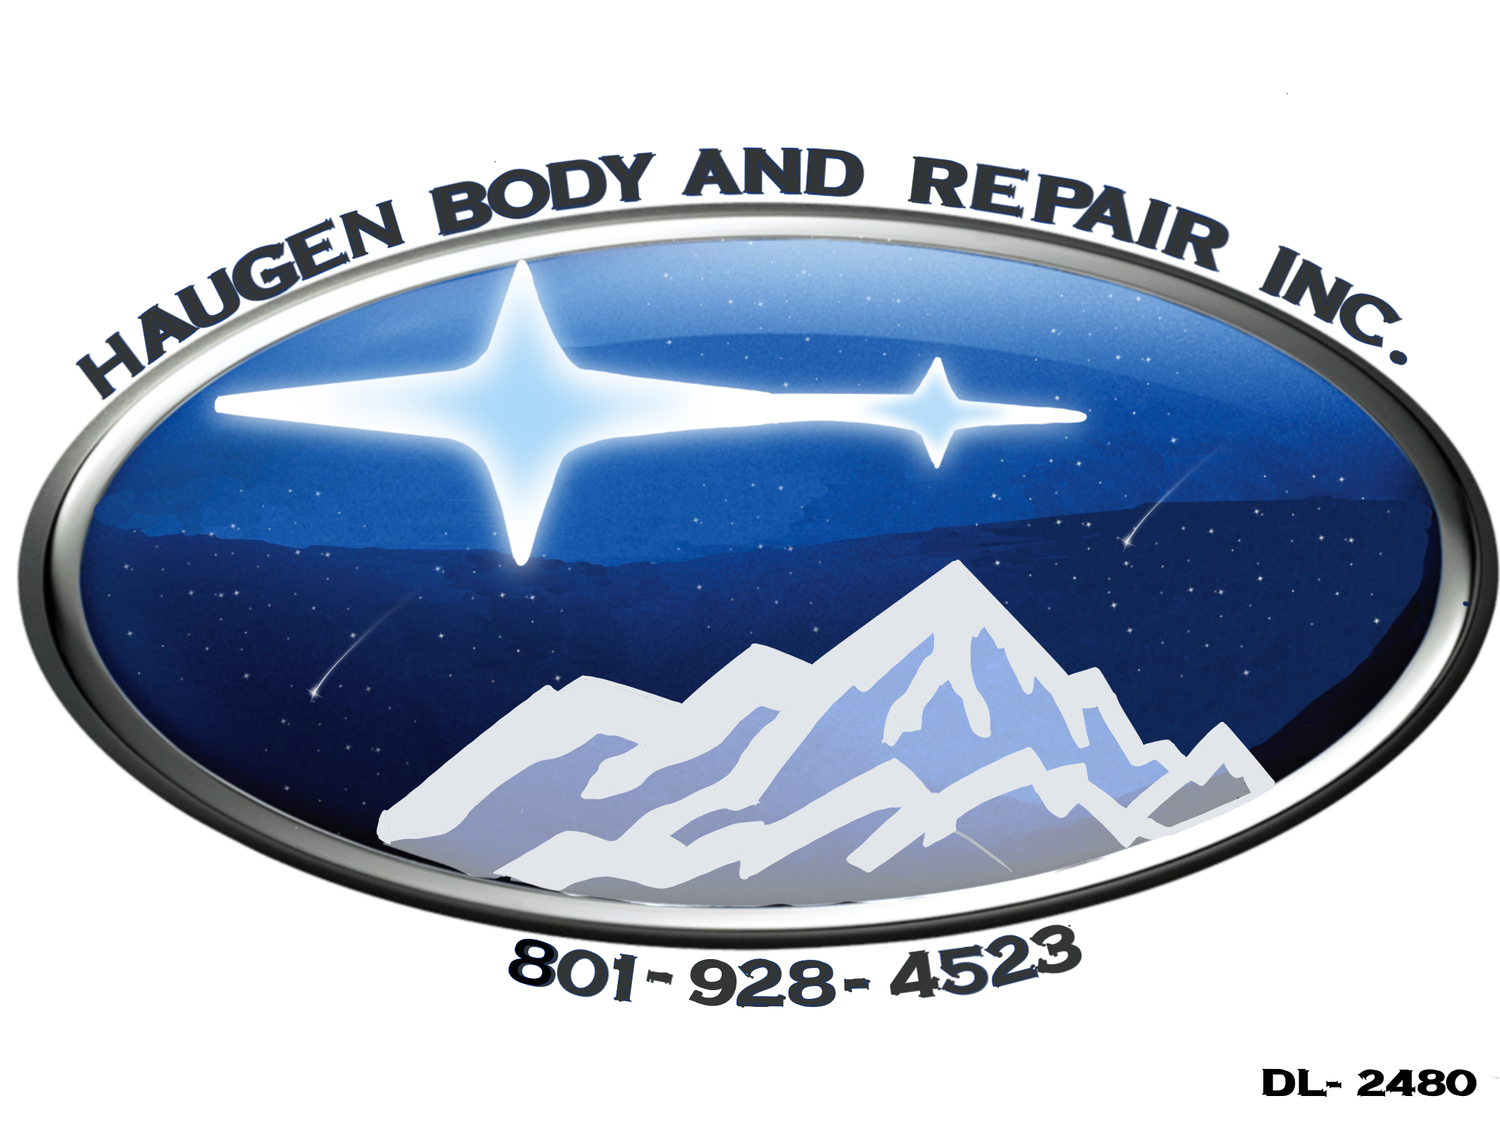 Haugen Body and Repair Inc.